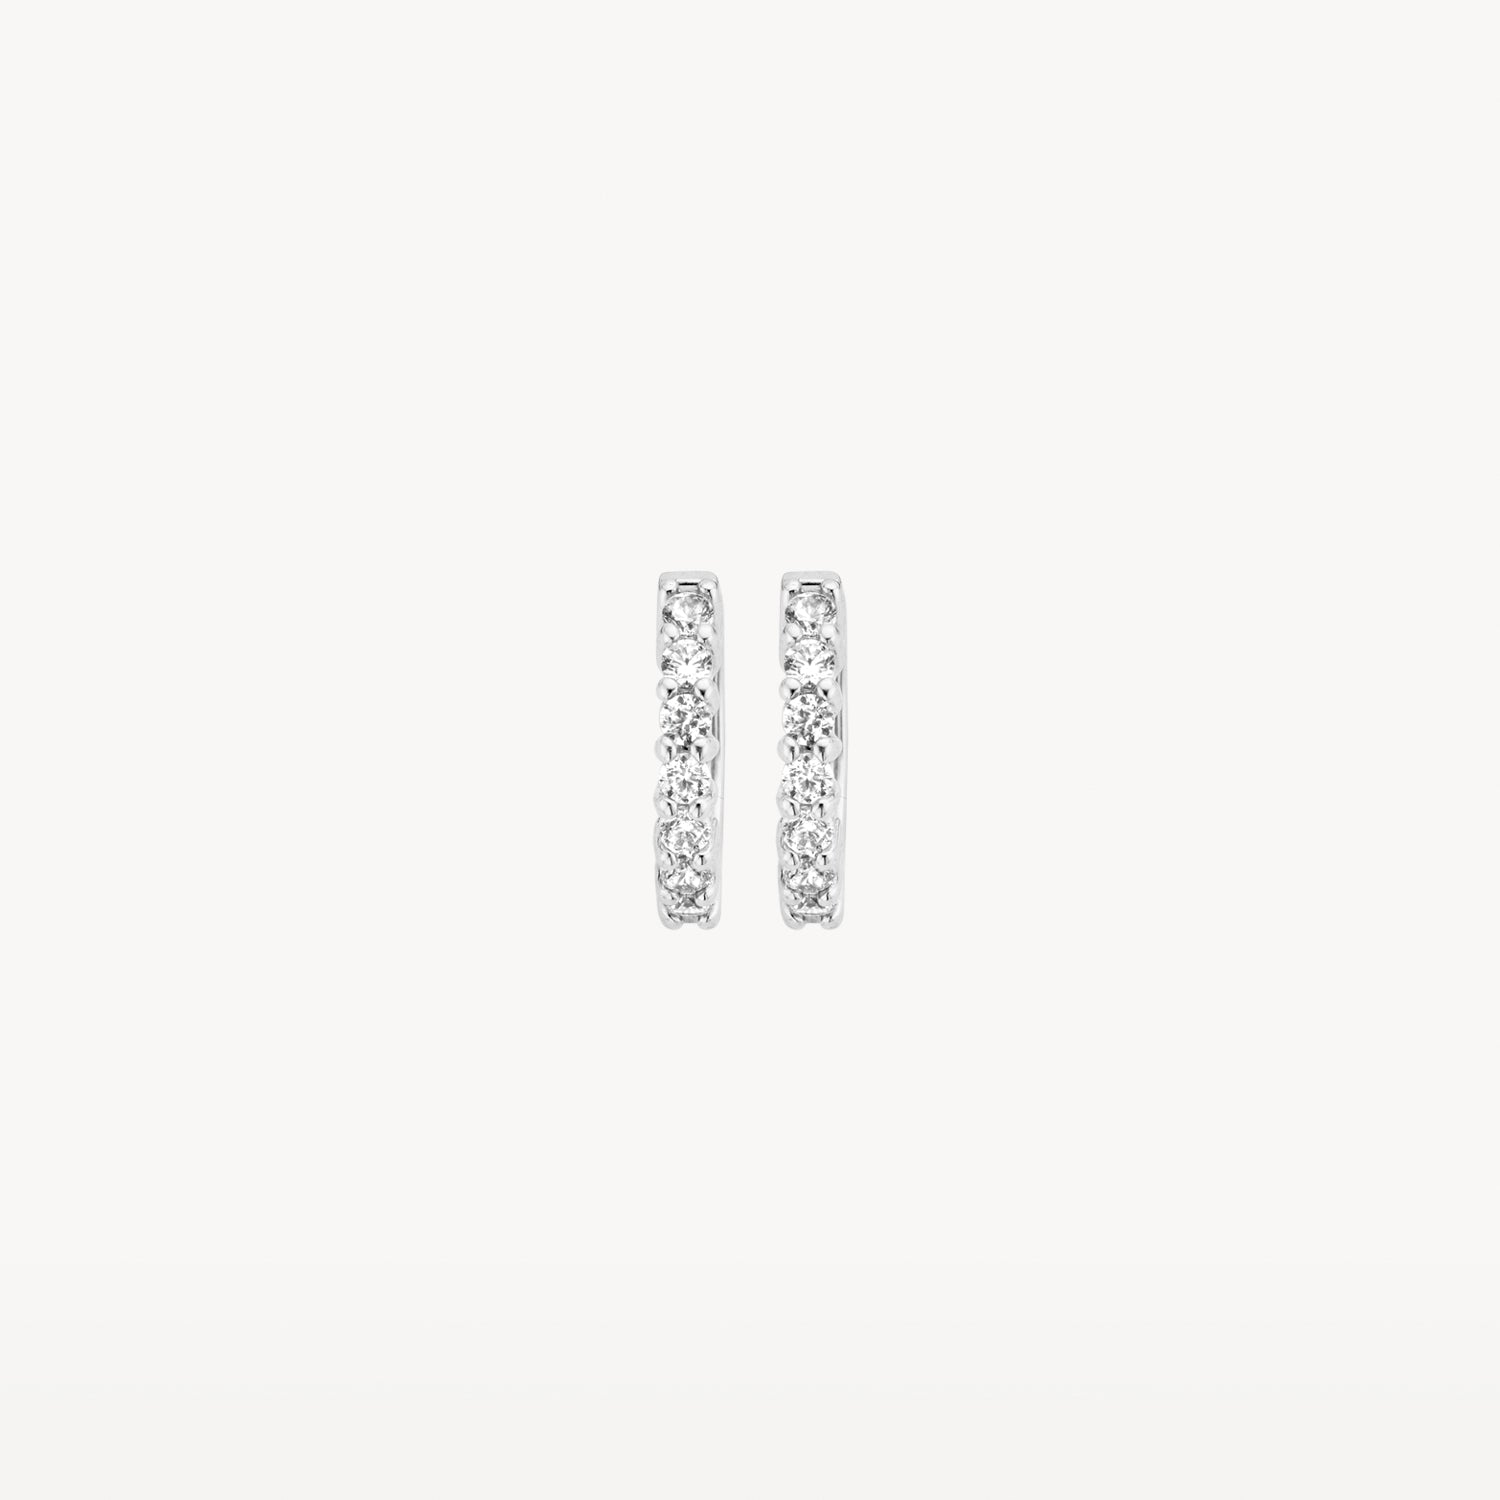 Earrings 7134WZI - 14k White Gold with zirconia